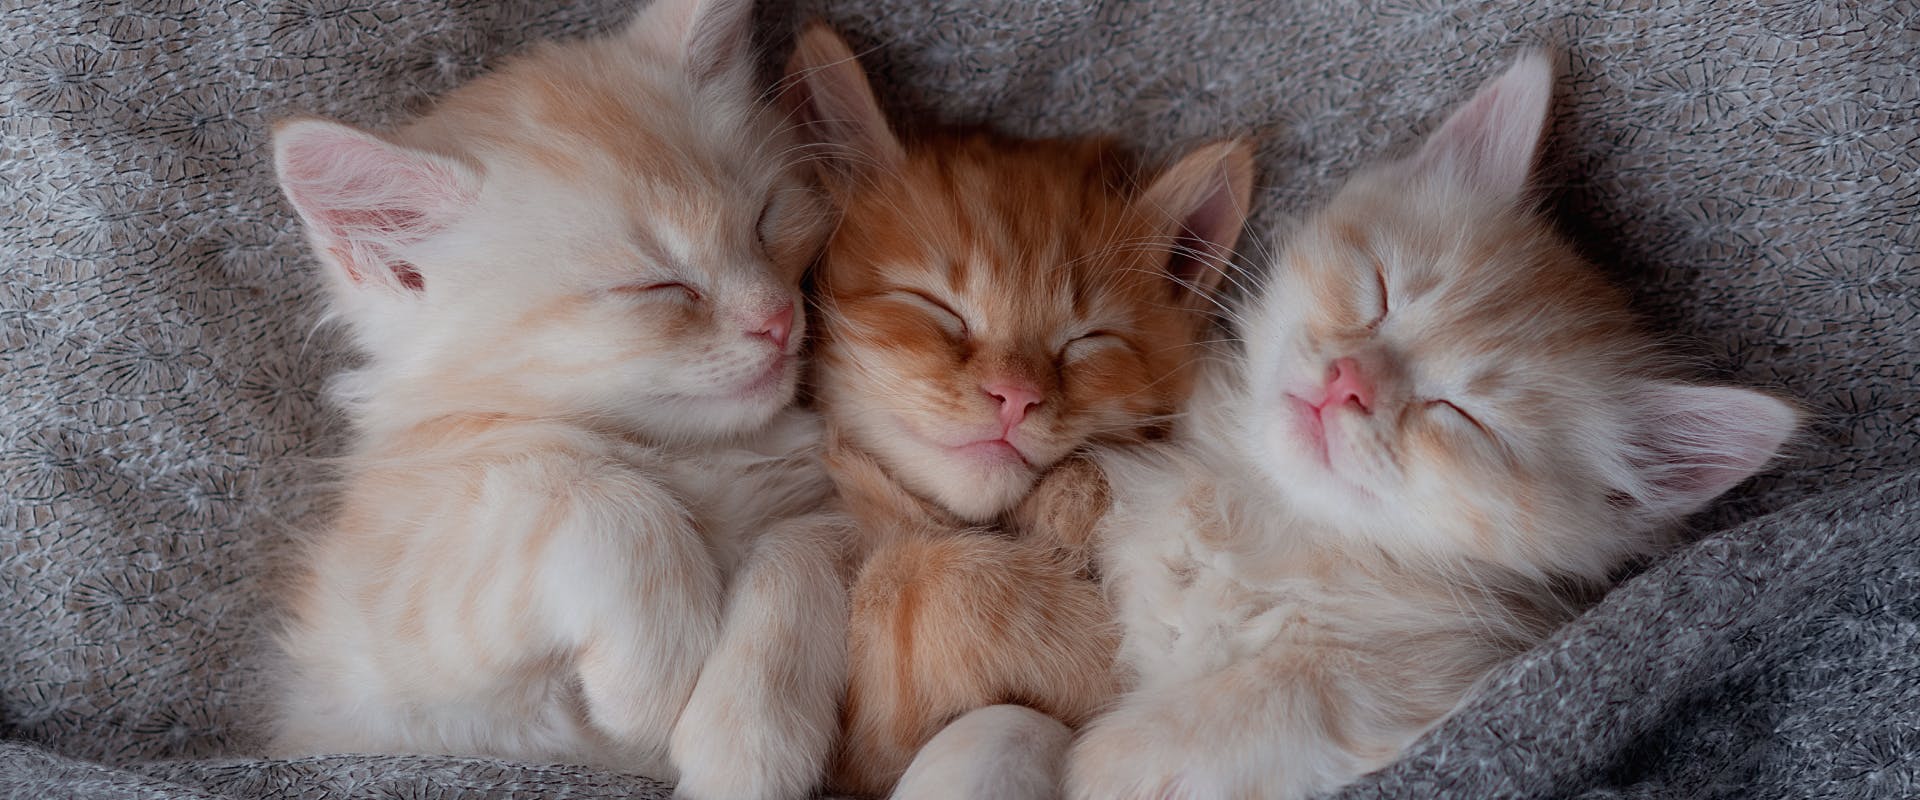 three sleeping kittens tucked into a gray blanket